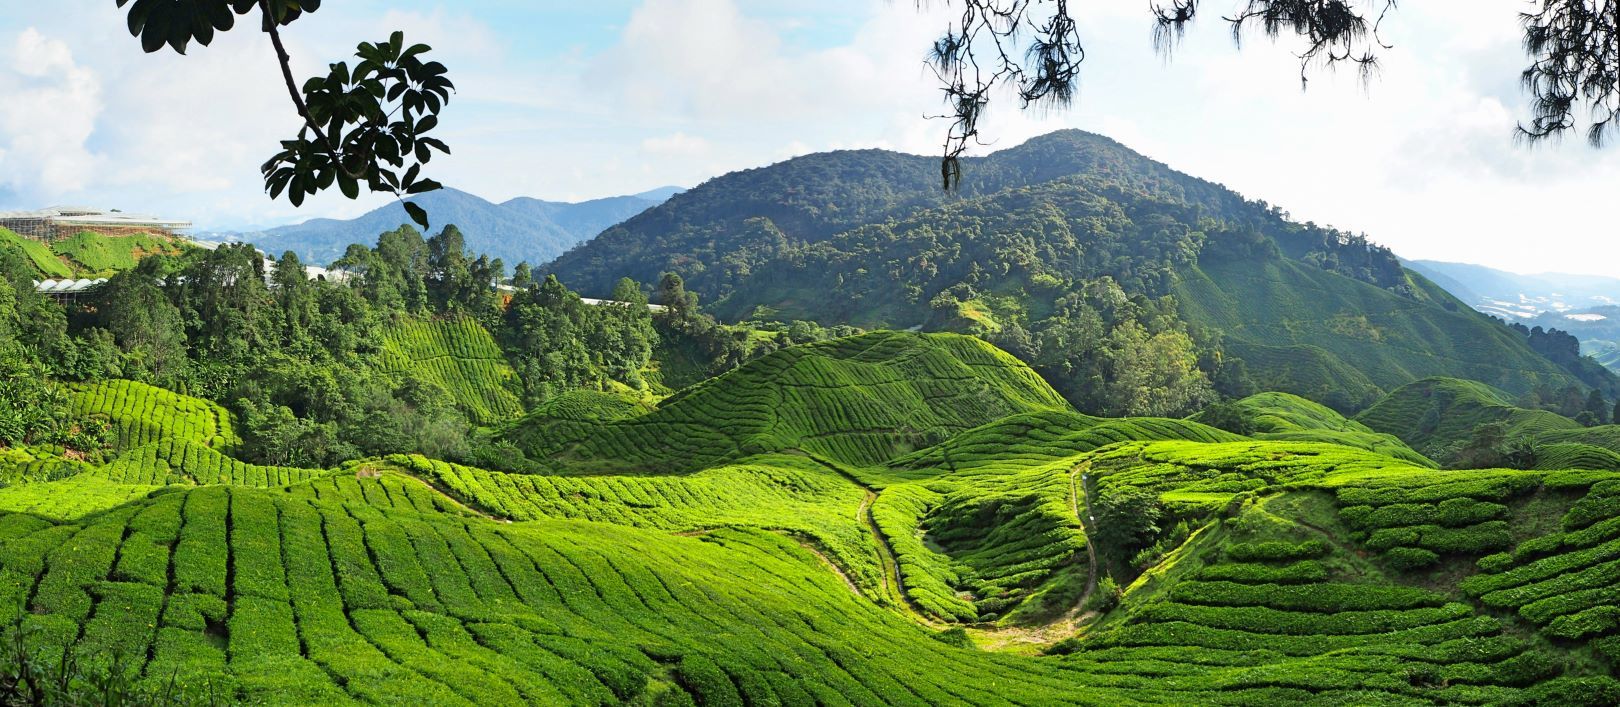 Malaysia_Highlands_Teeplantagen